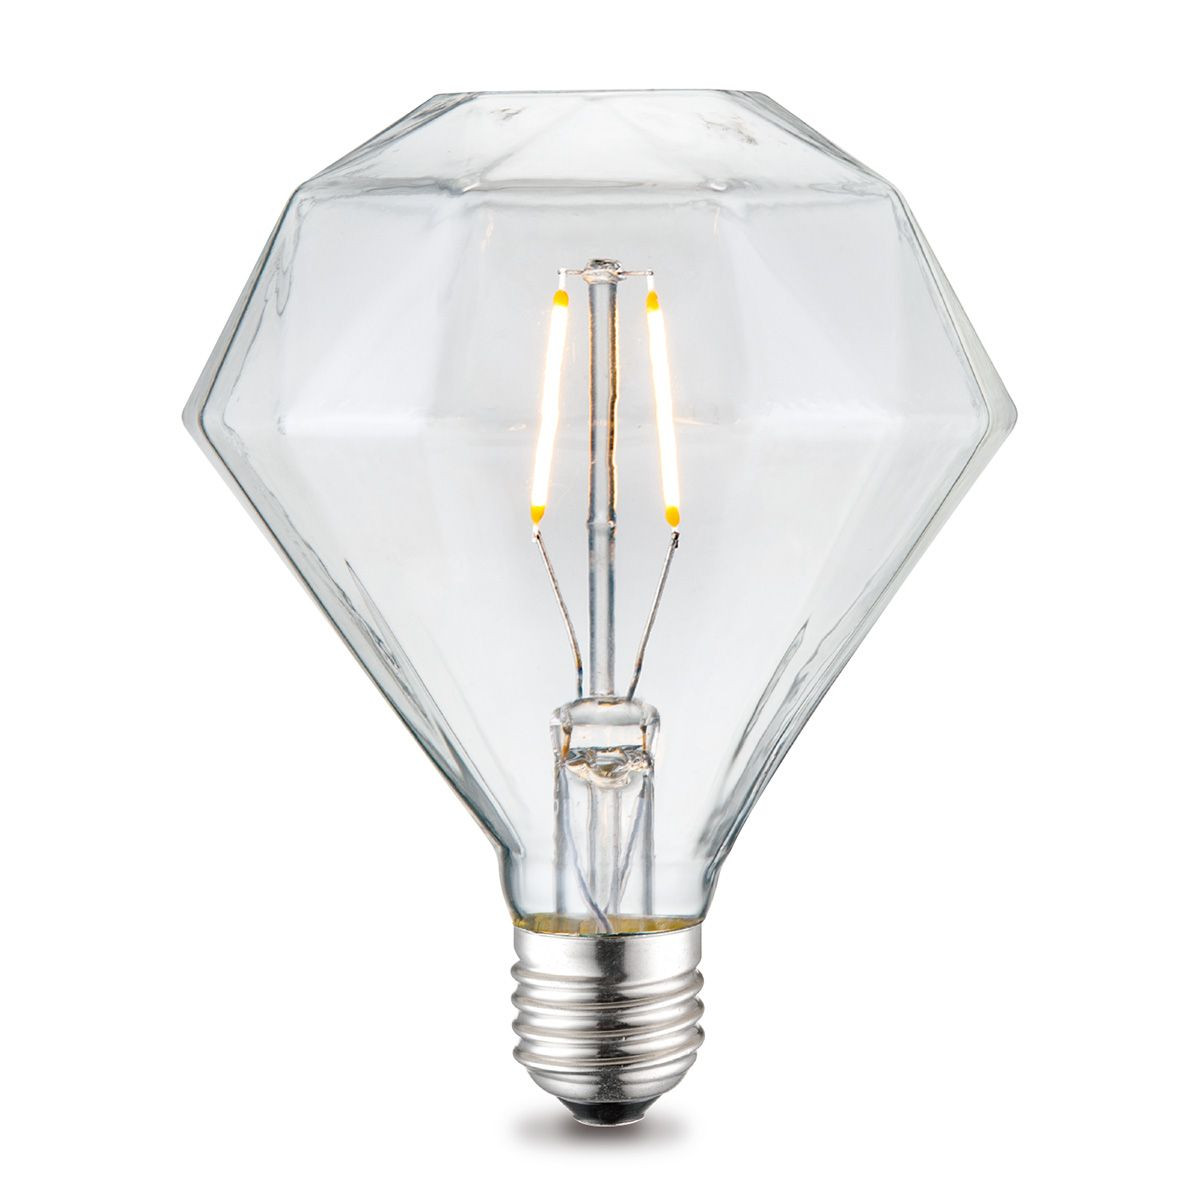 Edison Vintage LED lamp E27 LED filament lichtbron, Deco, Diamond D95, 9.5/9.5/13.5cm, Helder, Retro LED lamp Dimbaar, 4W 350lm 3000K, warm wit licht, geschikt voor E27 fitting